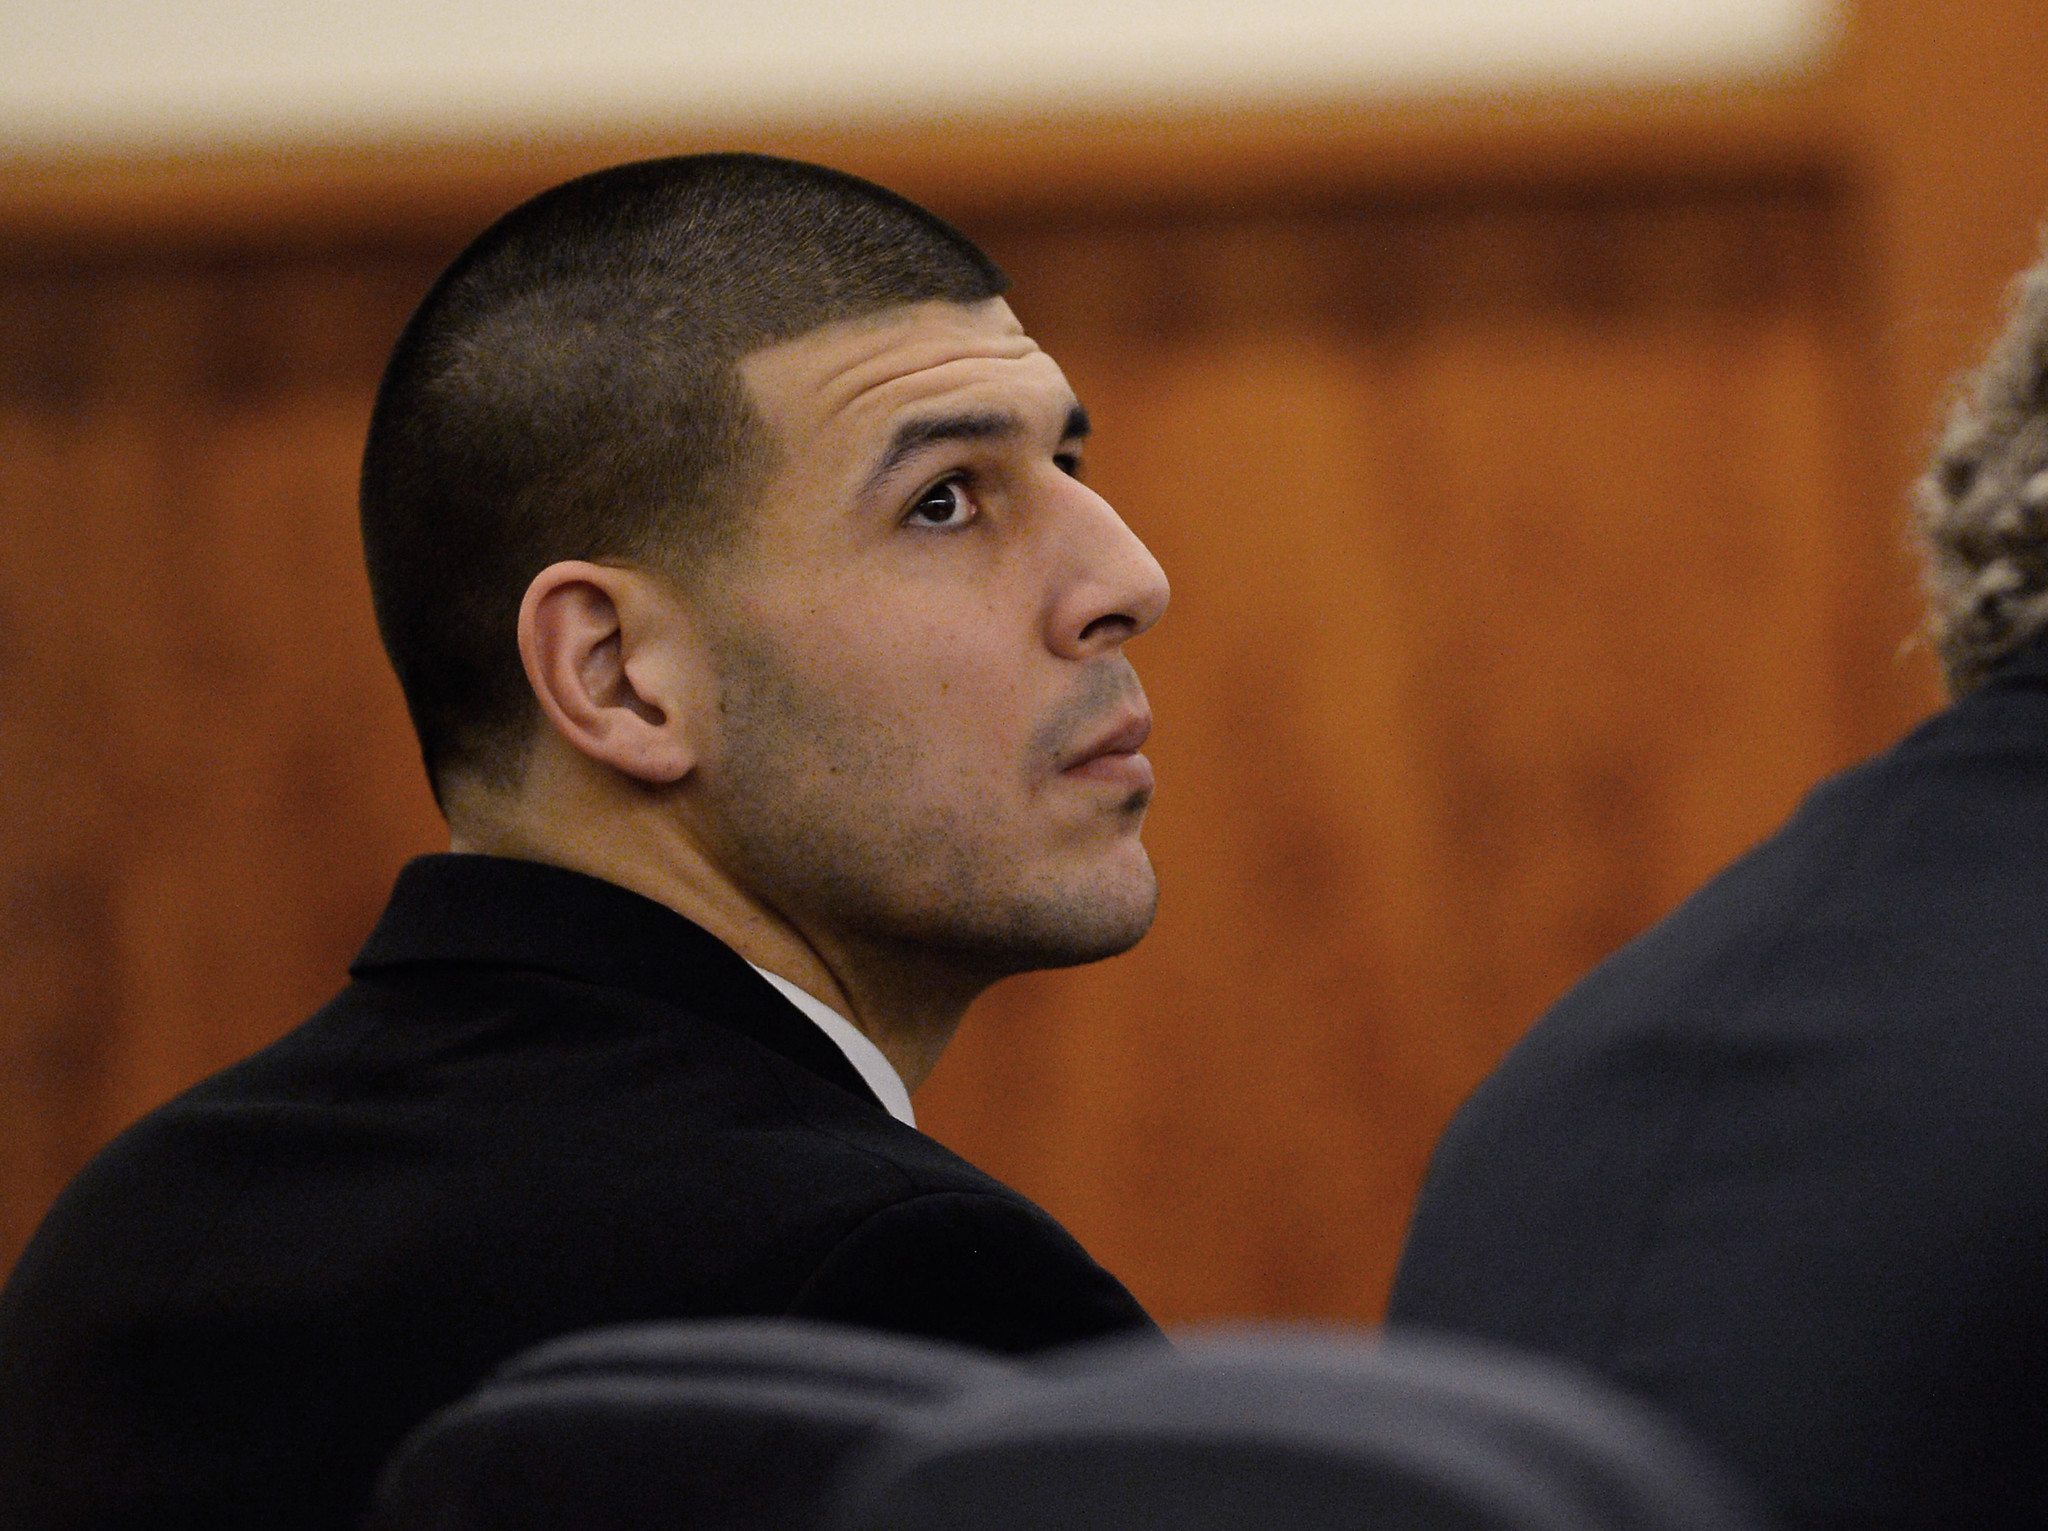 Filing Tossing conviction would reward Aaron Hernandez's suicide